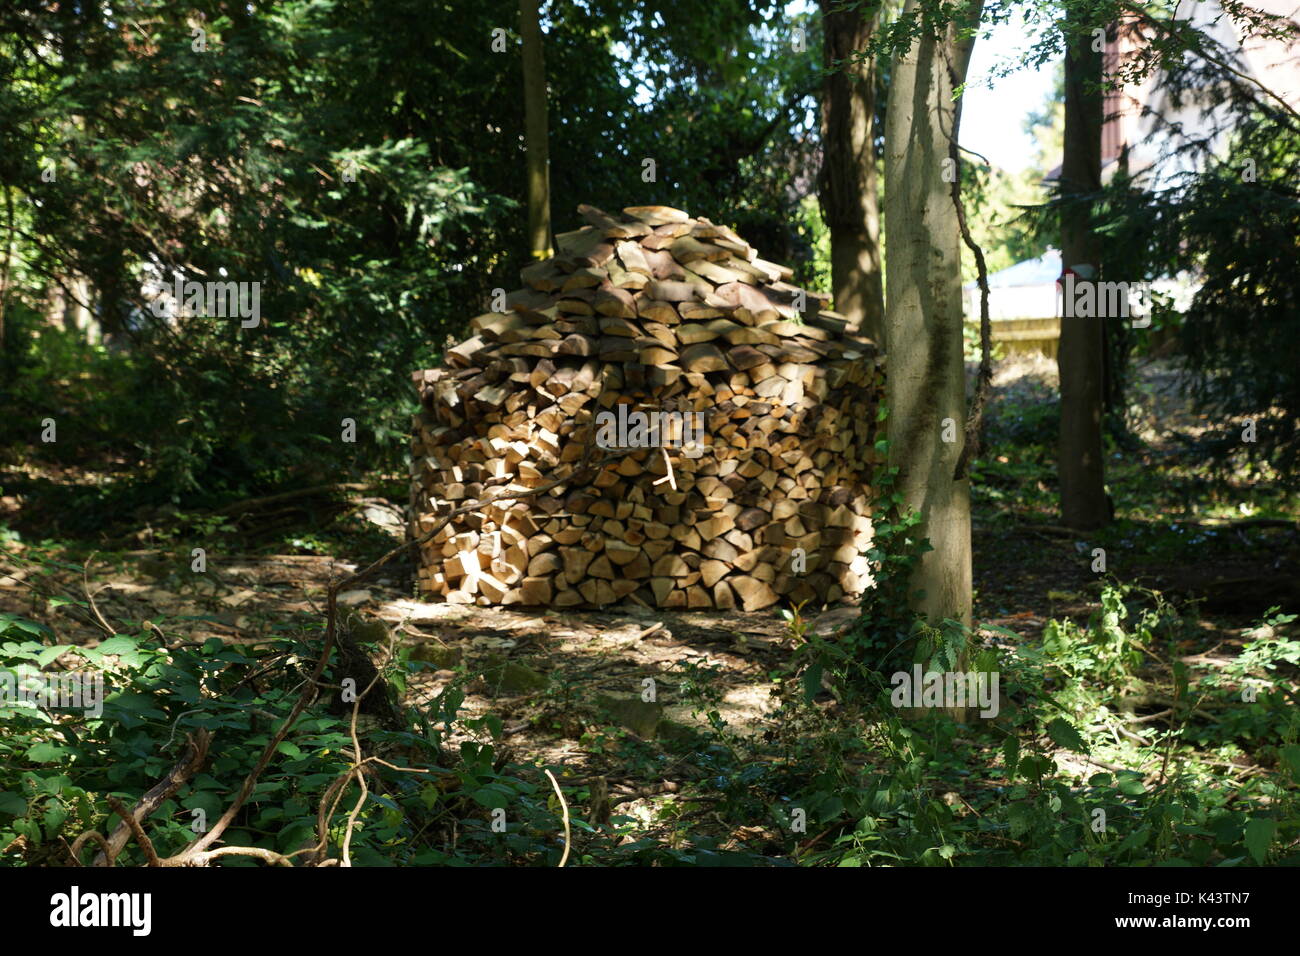 Wood, Stack Firewood, Winter Fuel, Cord Wood, Lumber, Decorative, Rustic, Wood Burner, Stove, Split Wood, Woodpile,Natural Fuel, Environmental. Stock Photo